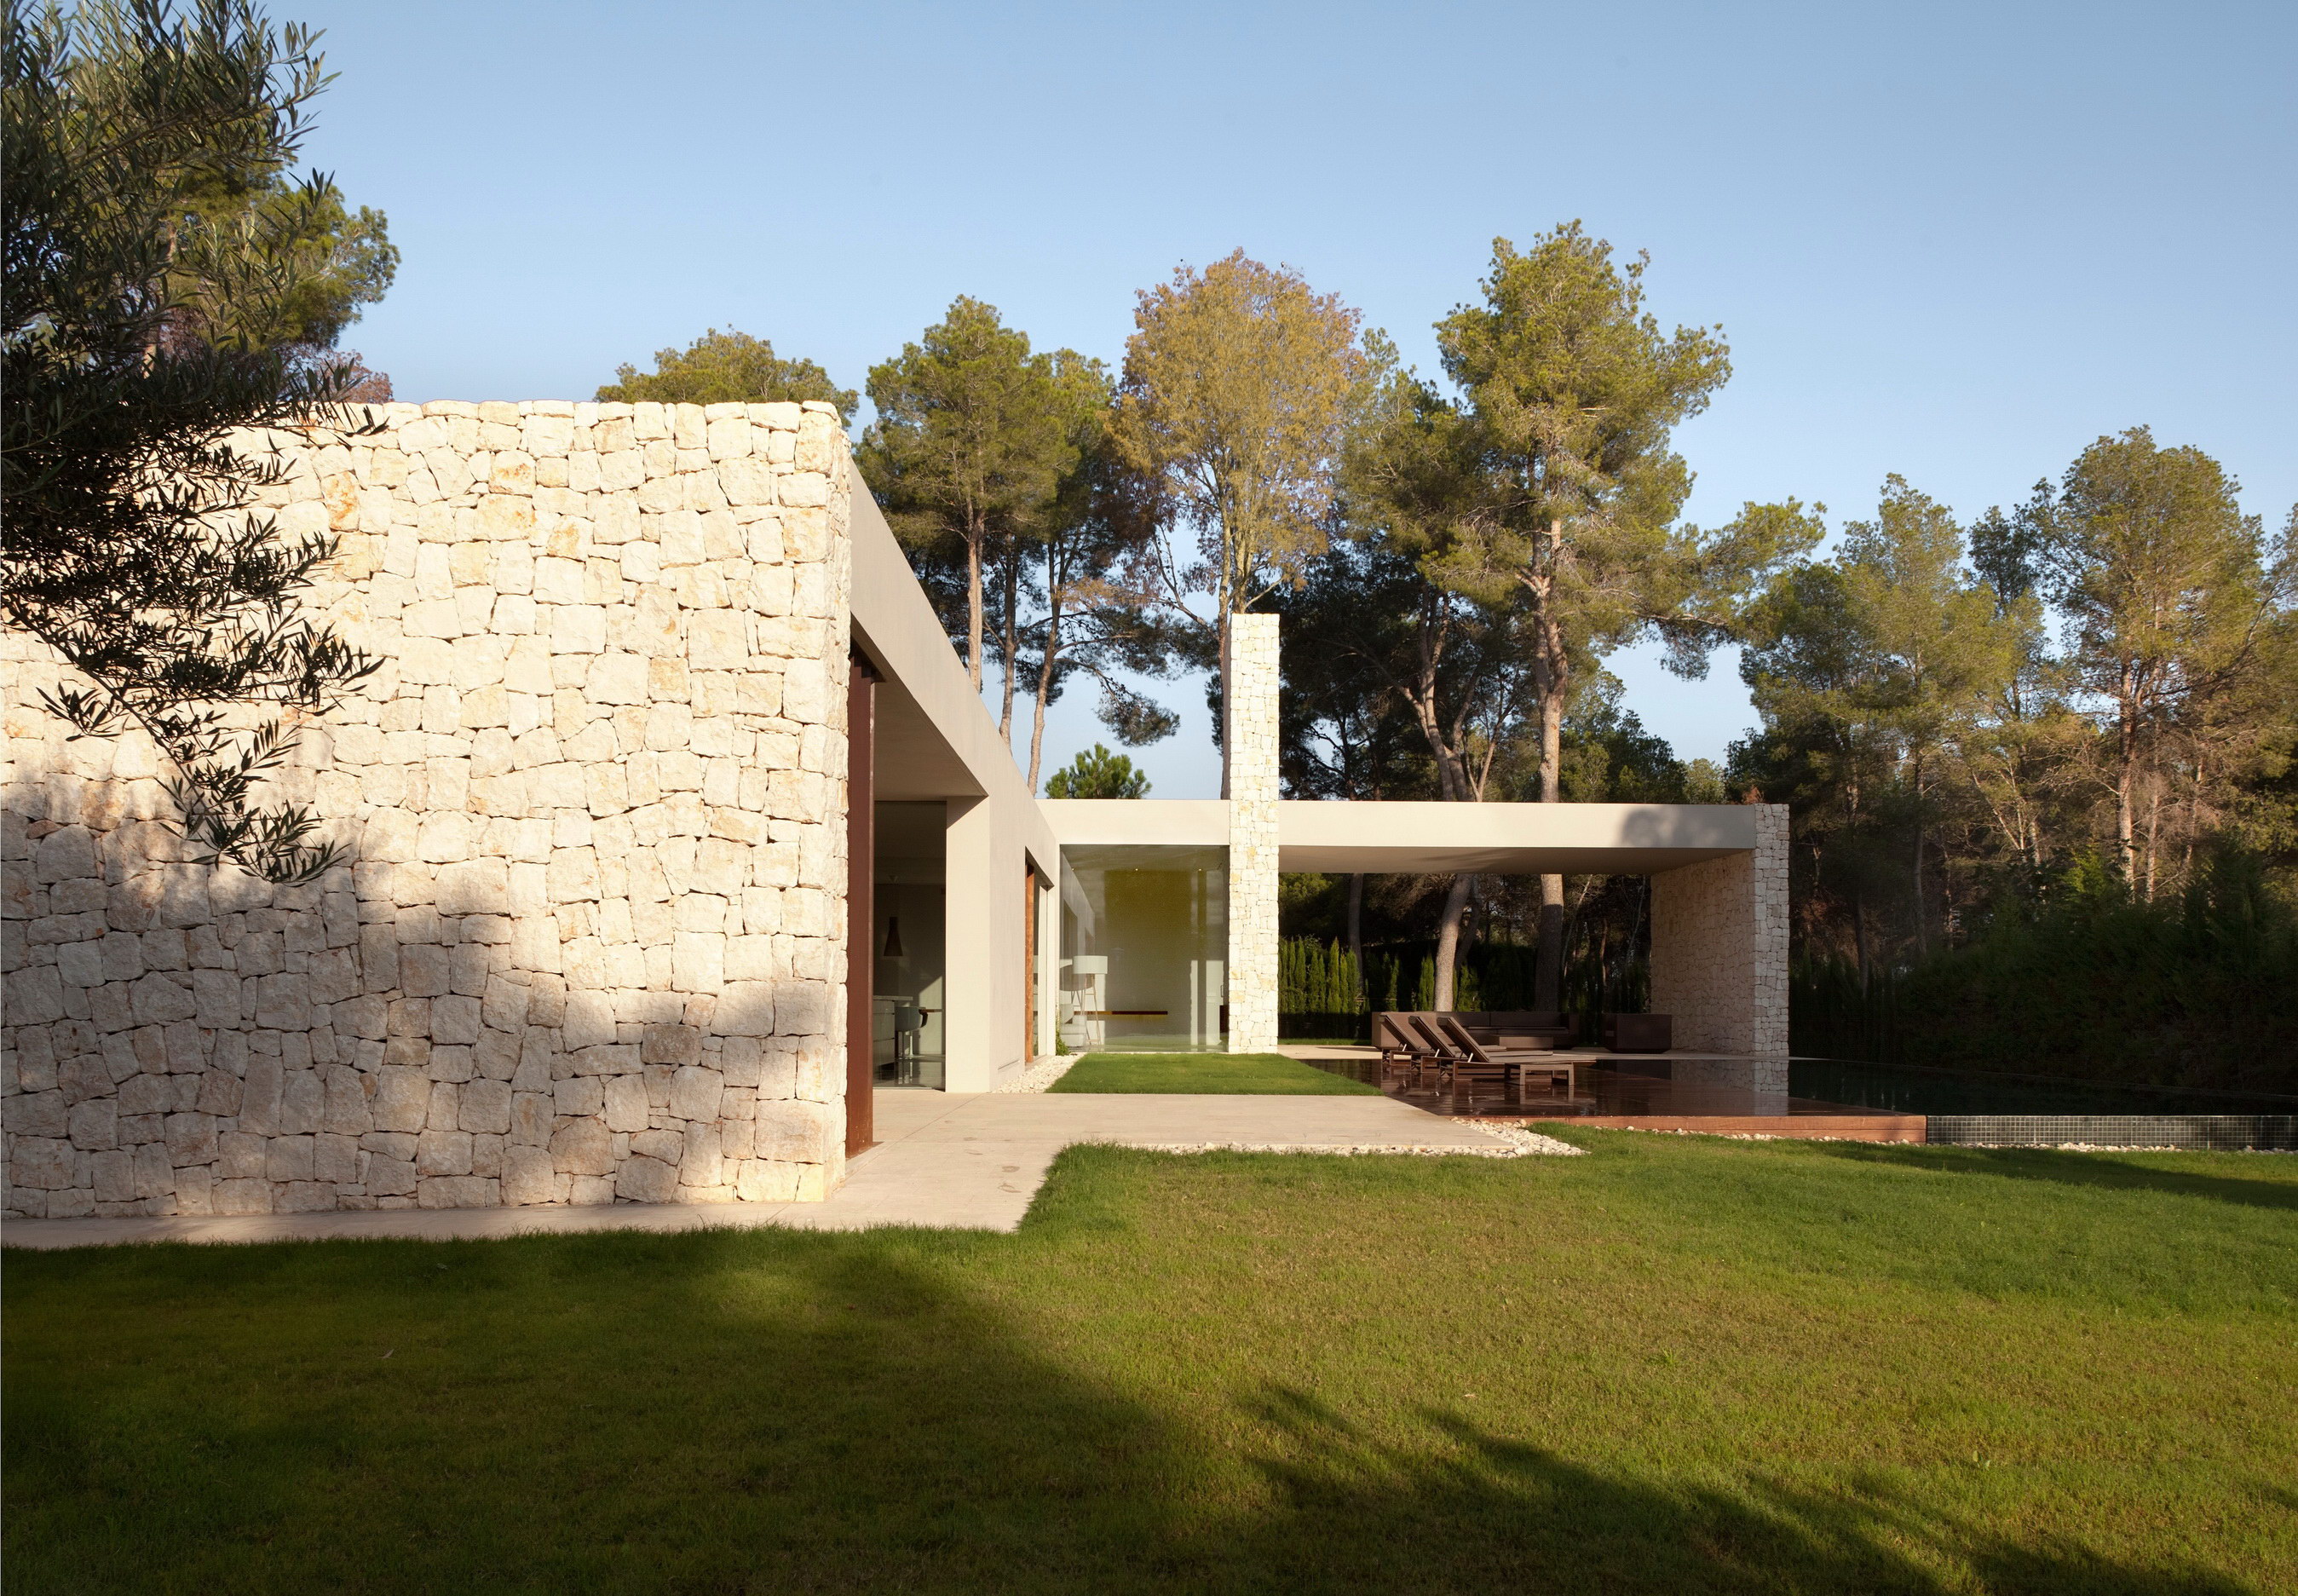 The Forest House by Ramón Esteve Estudio de Arquitectura